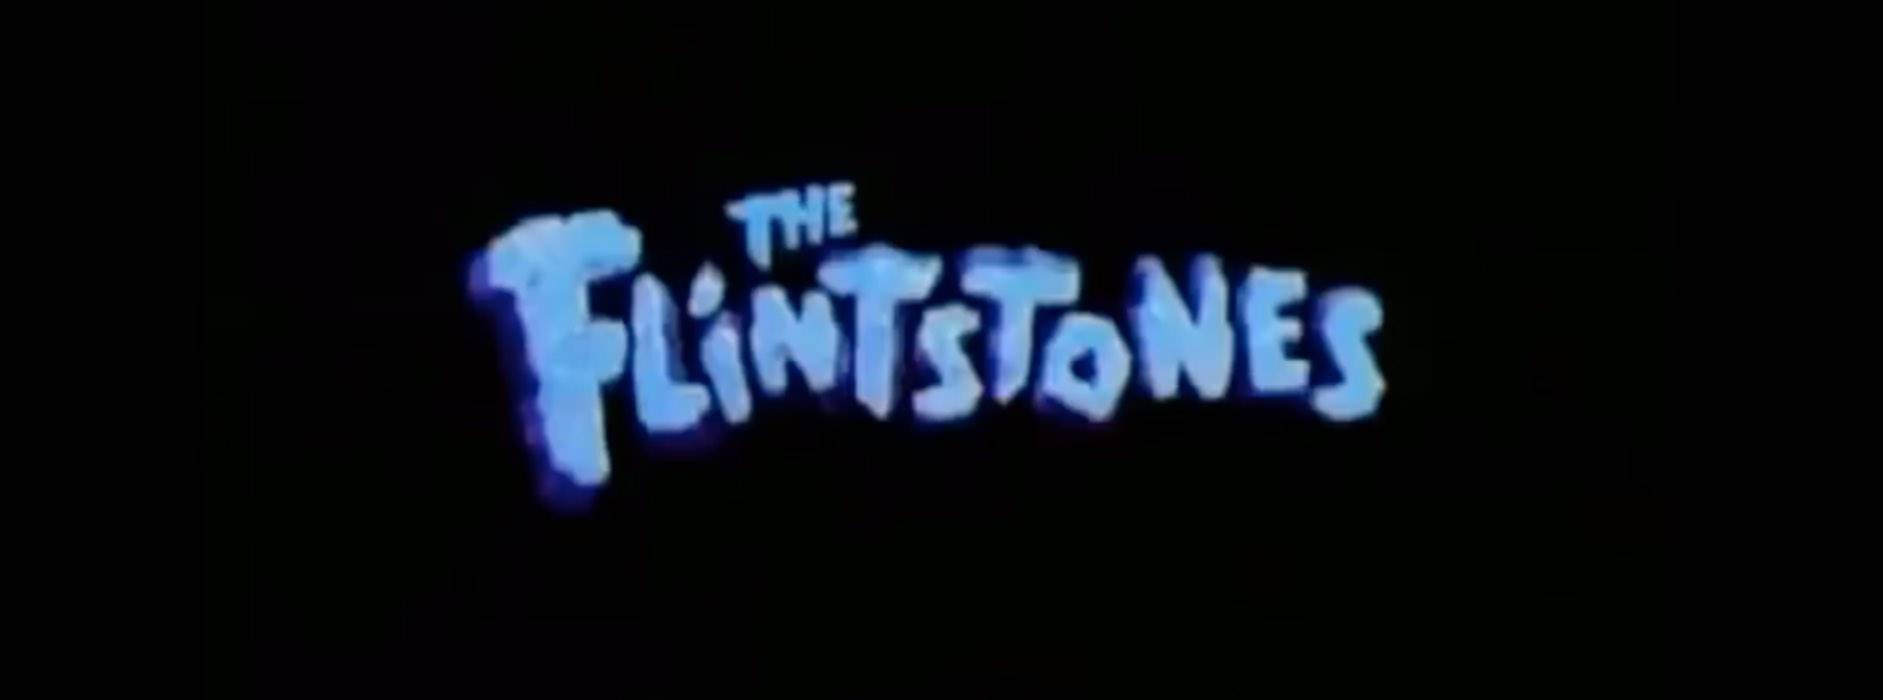 'I Flintstones': info, trama, cast e curiosità sul film con John Goodman